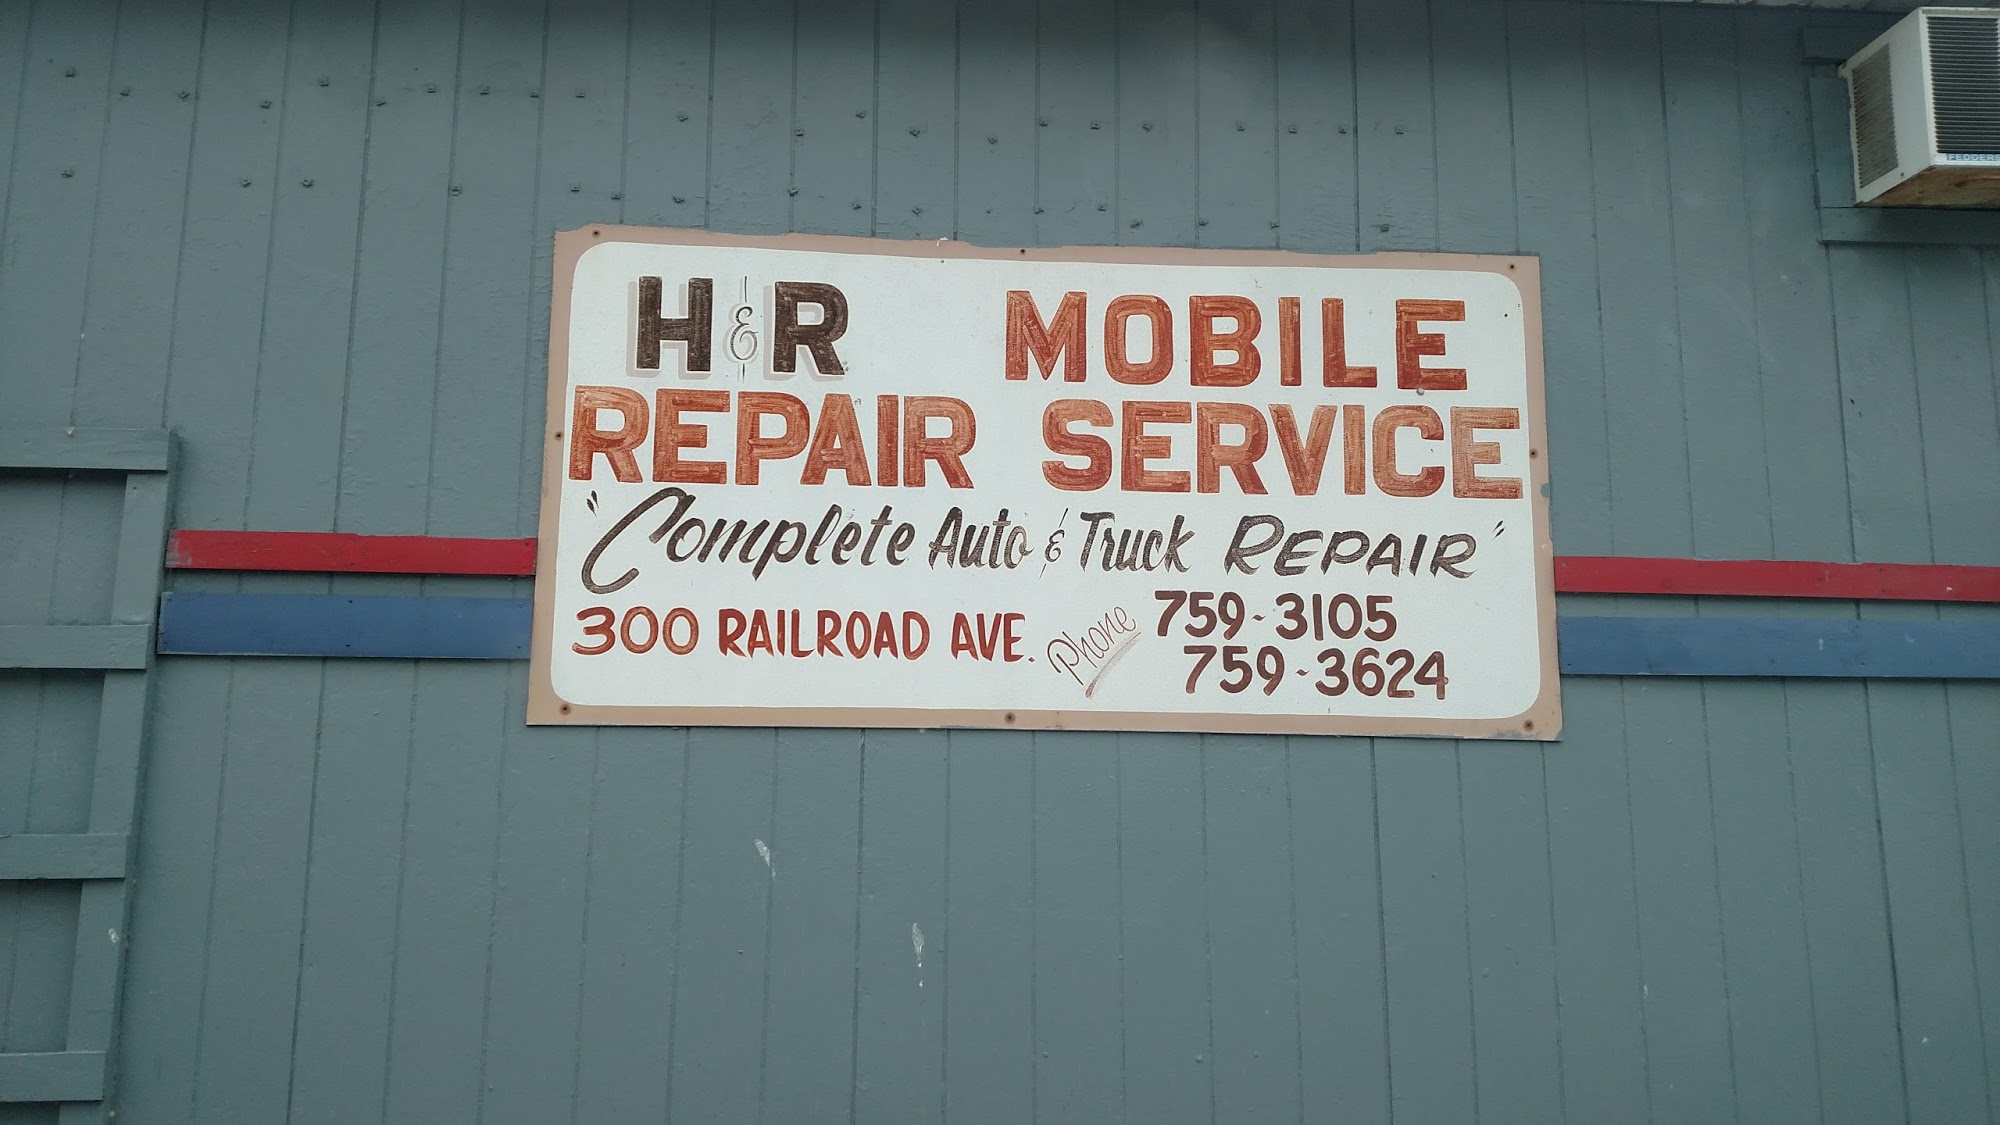 H & R Mobile Repair Services